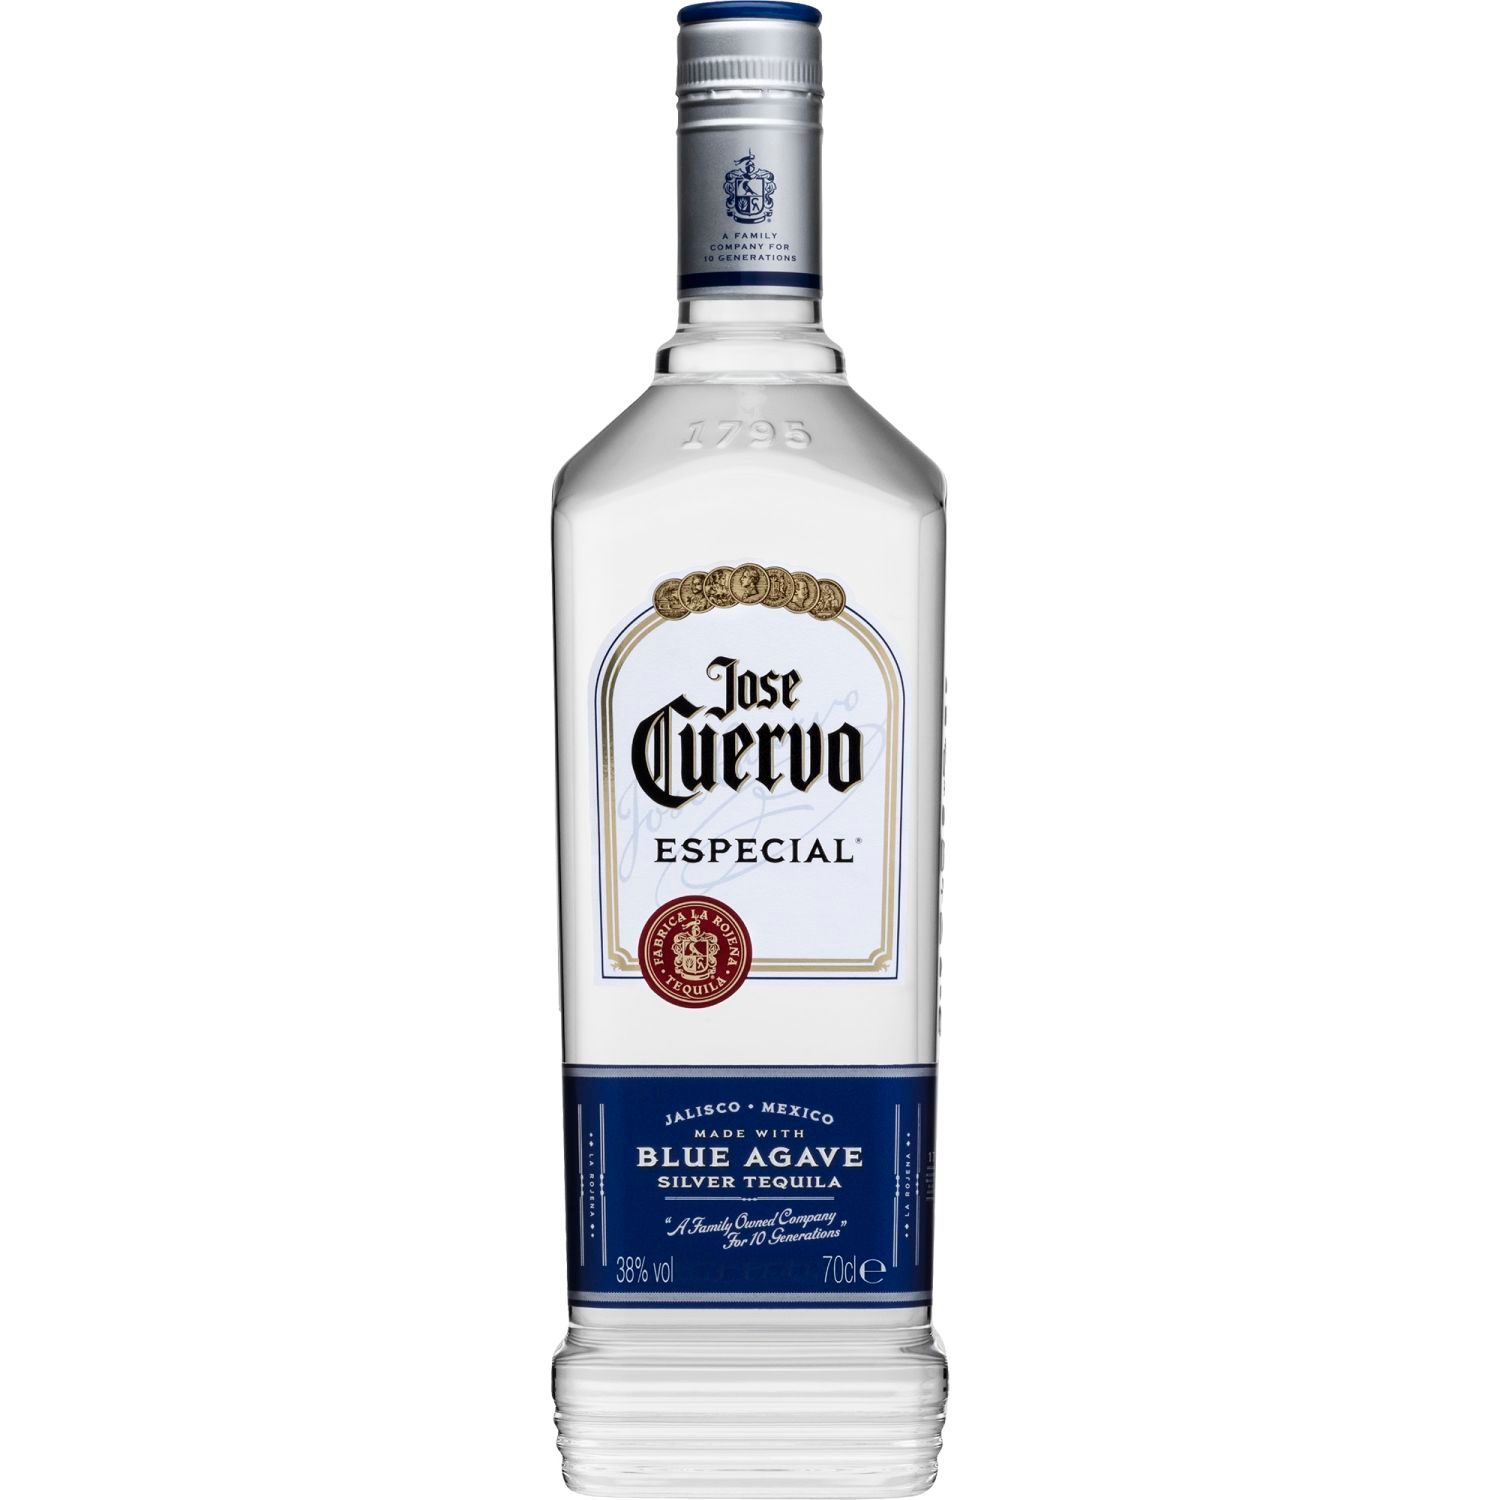 Jose Cuervo Especial Silver Tequila 700mL Bottle